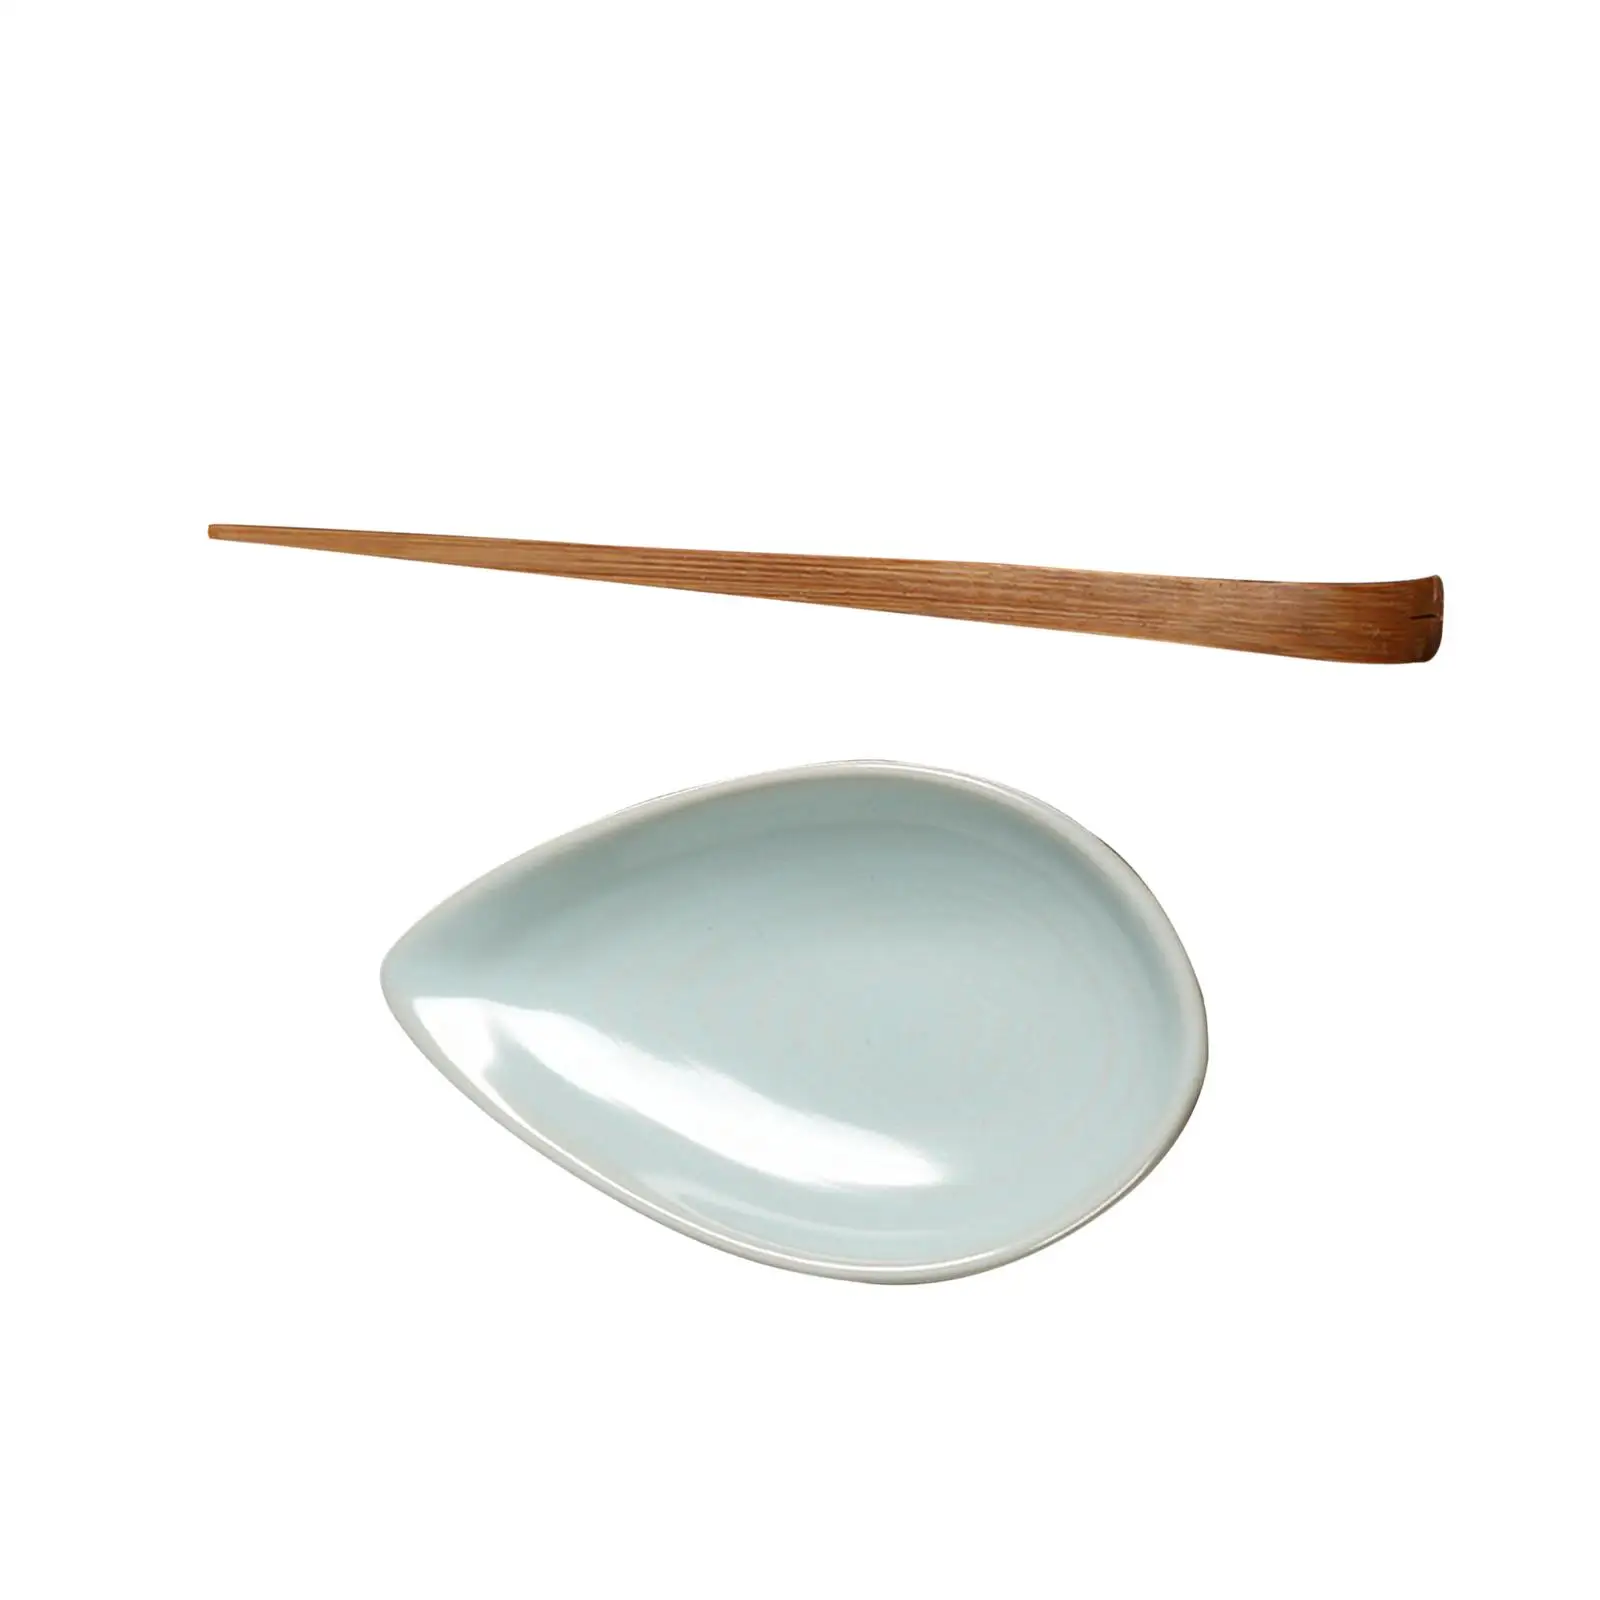 Ceramic Tea Spoon Shovel Tea Leaf Measure Spoon Durable Teaspoon Rest Traditional for Home Tea Room Tea Ceremony Kitchen Indoor